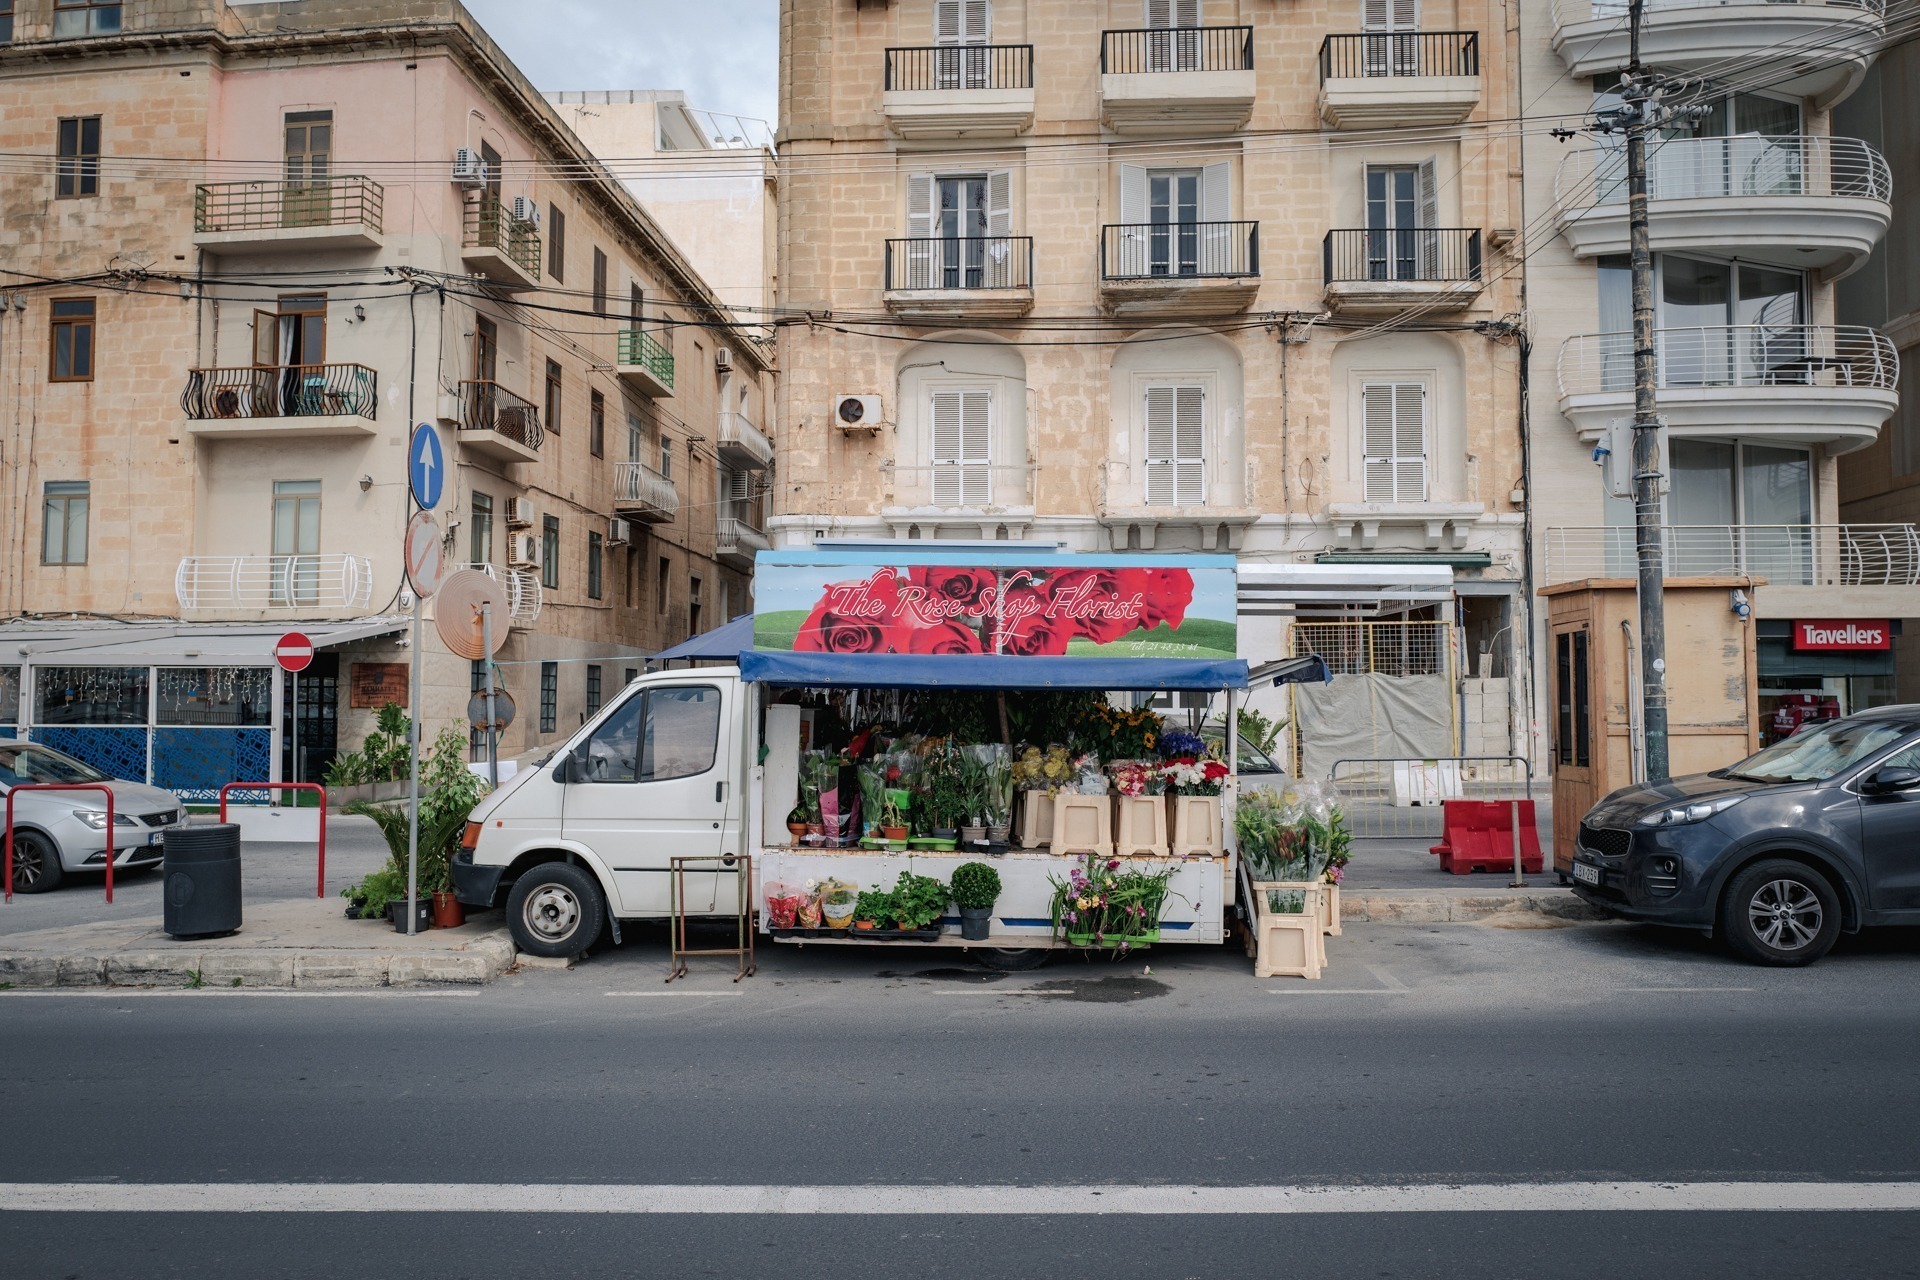 Fower truck vendor in Sliema, Malta island